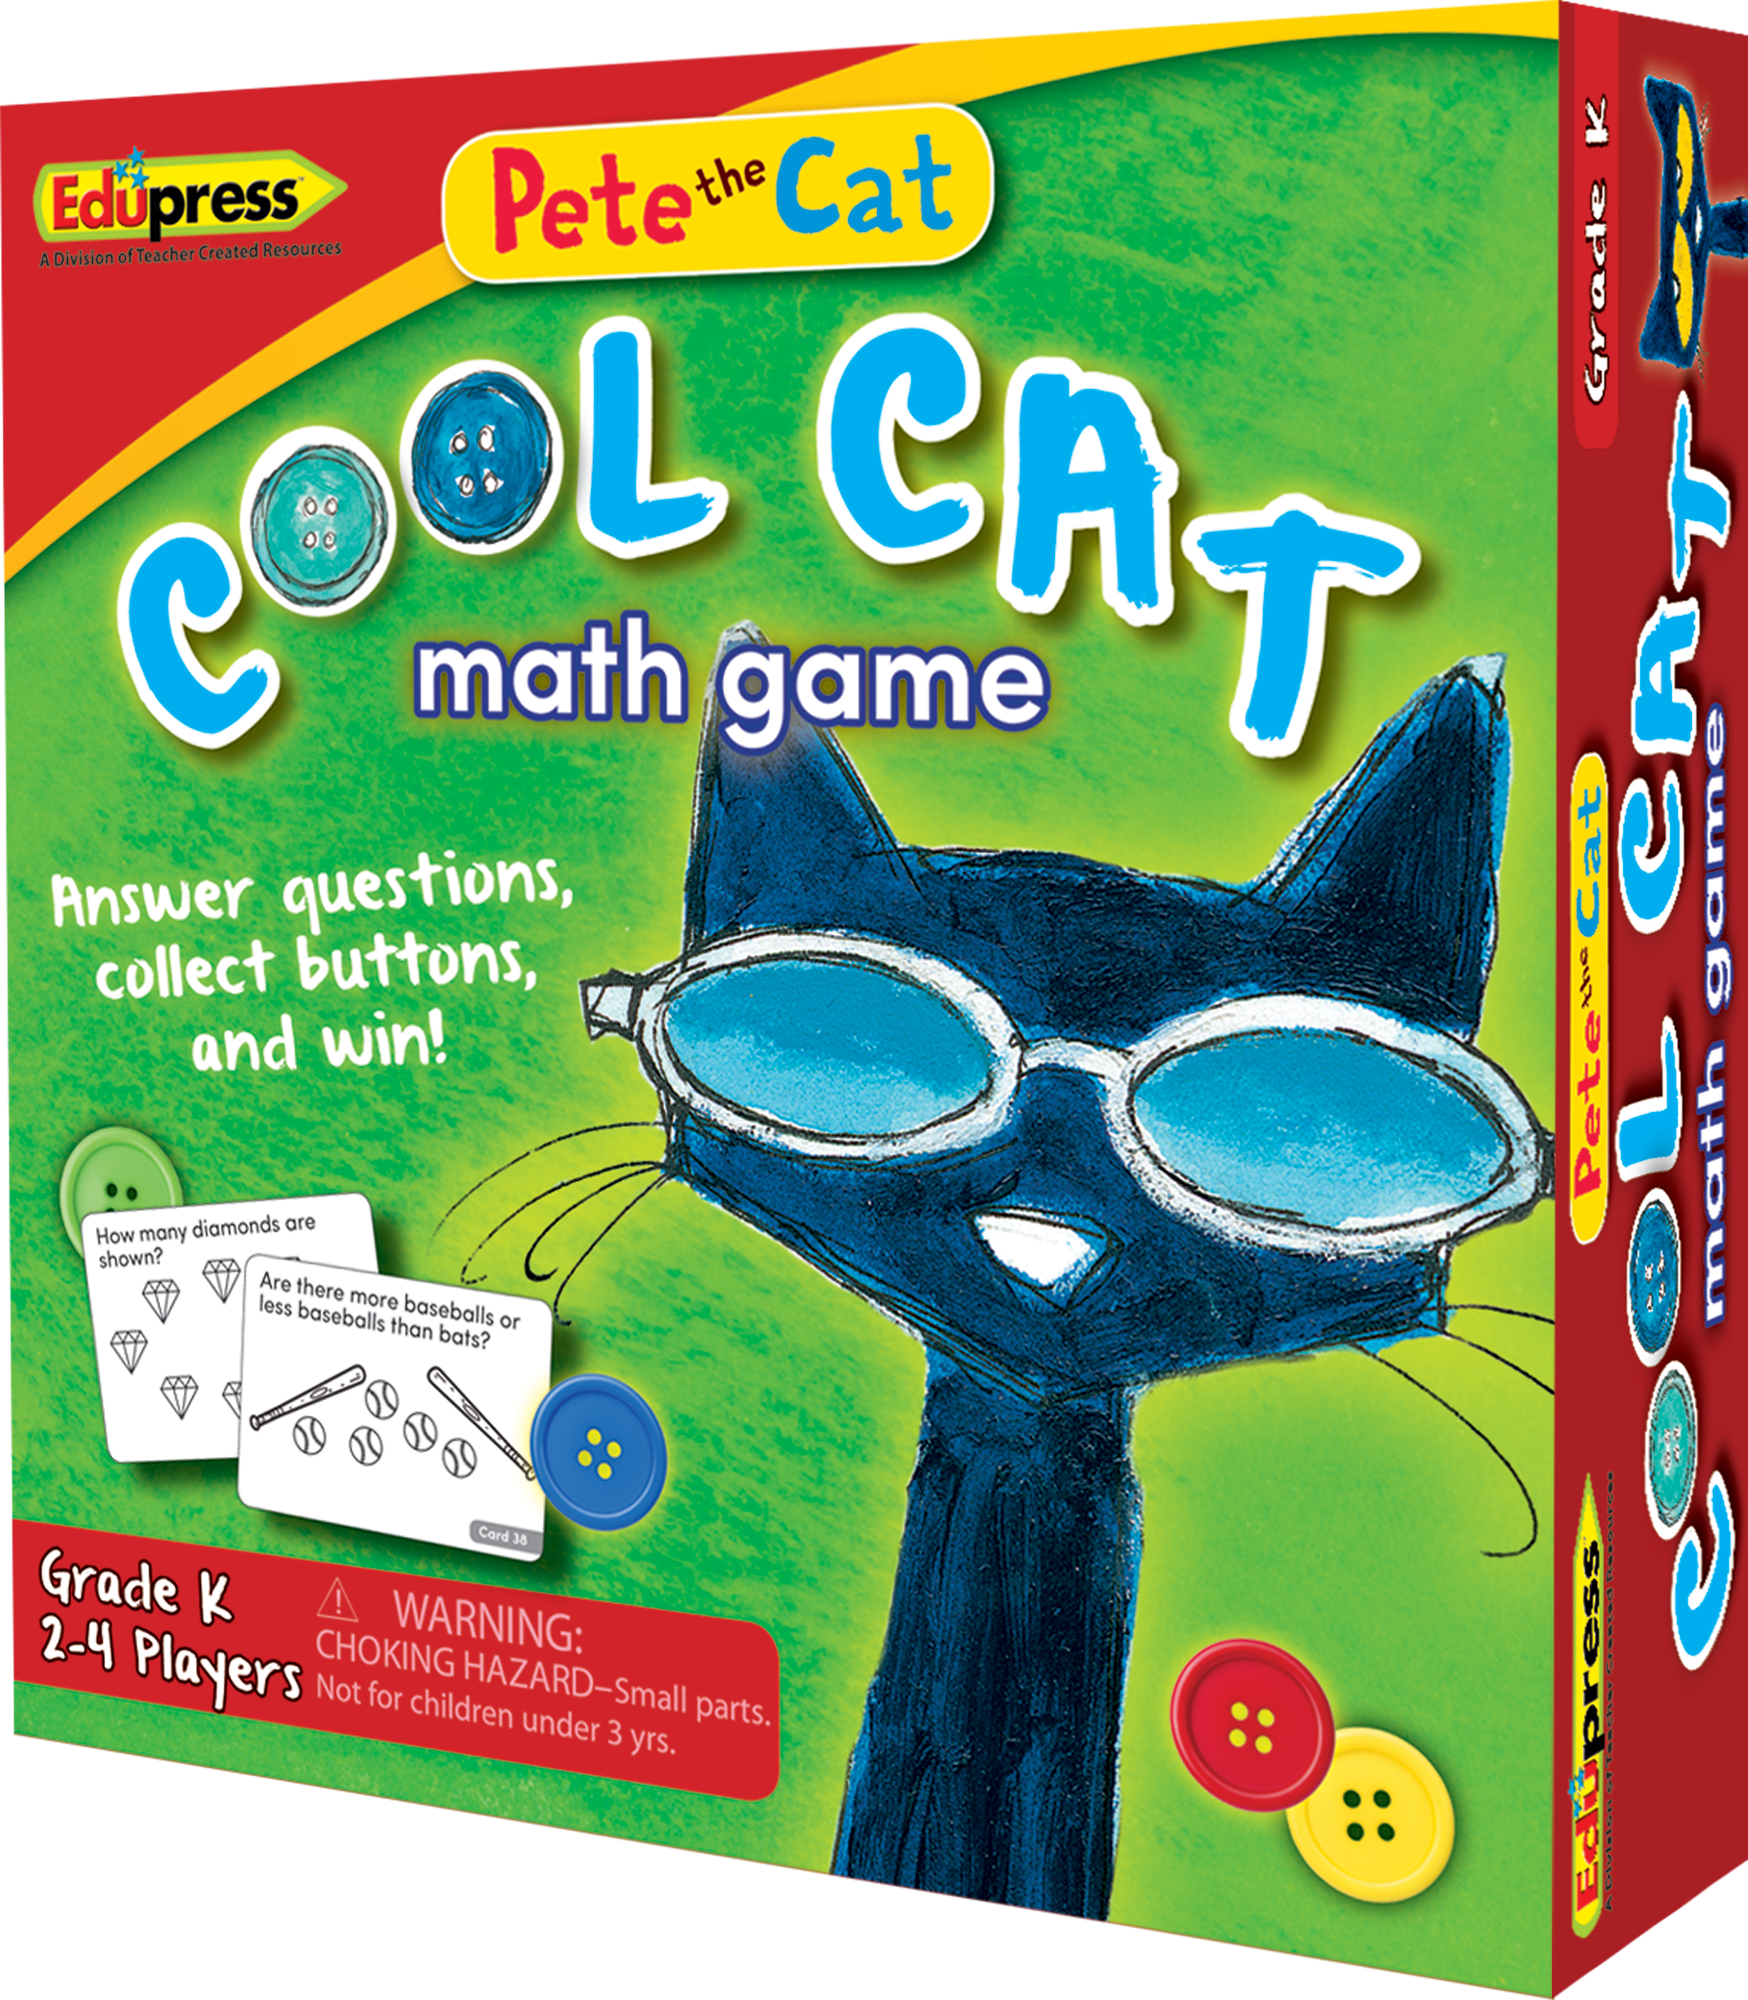 Pete the CatÂ® Cool Cat Math Game (Gr. K)